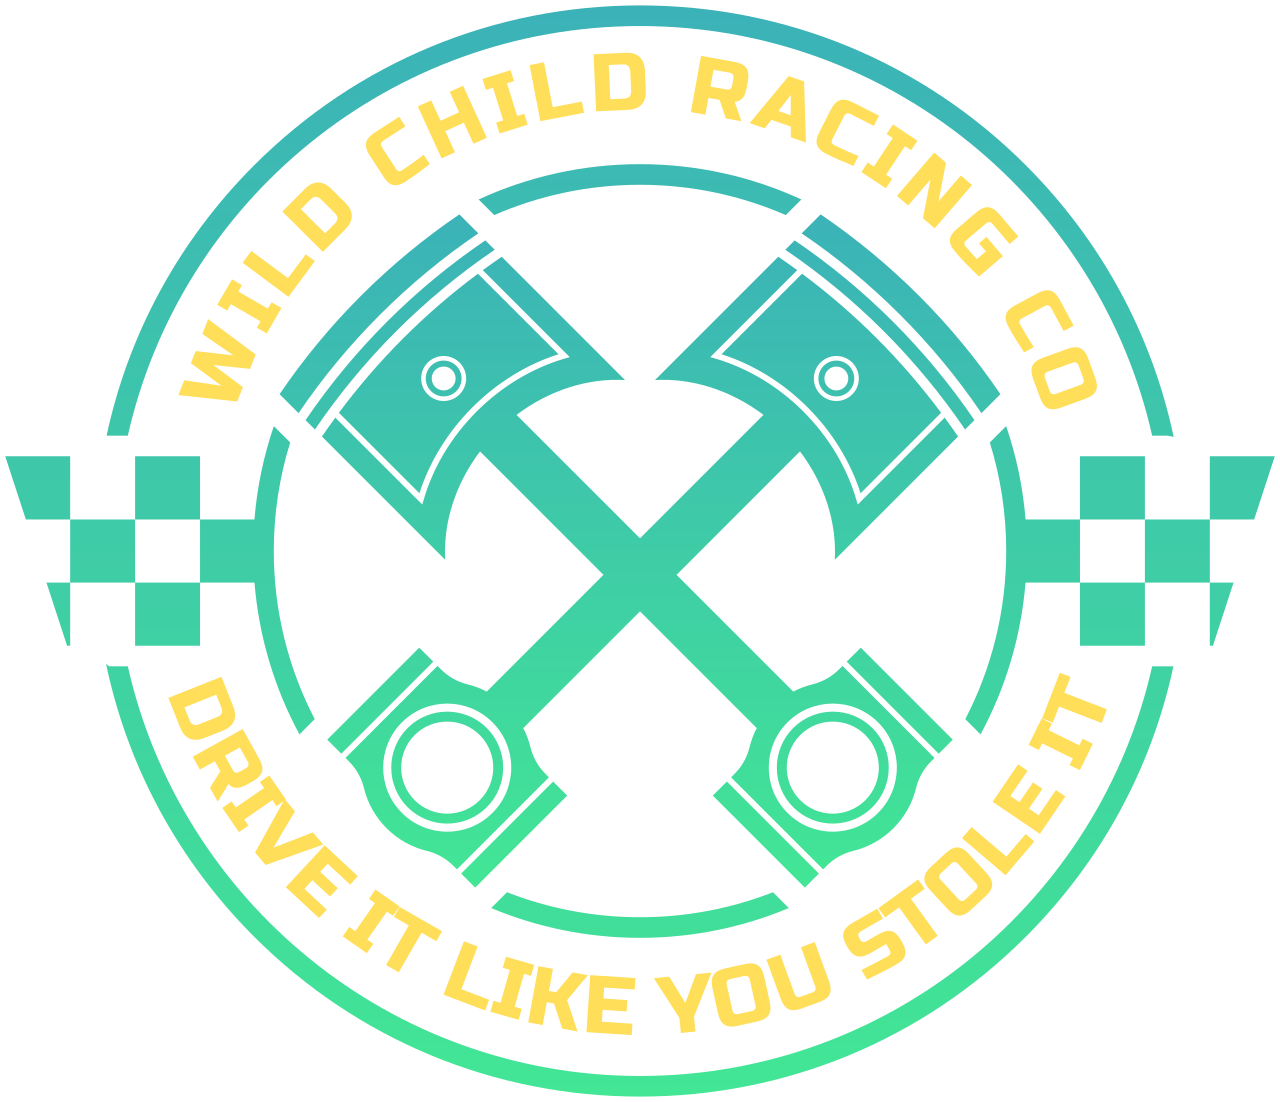 WILD CHILD RACING CO's logo